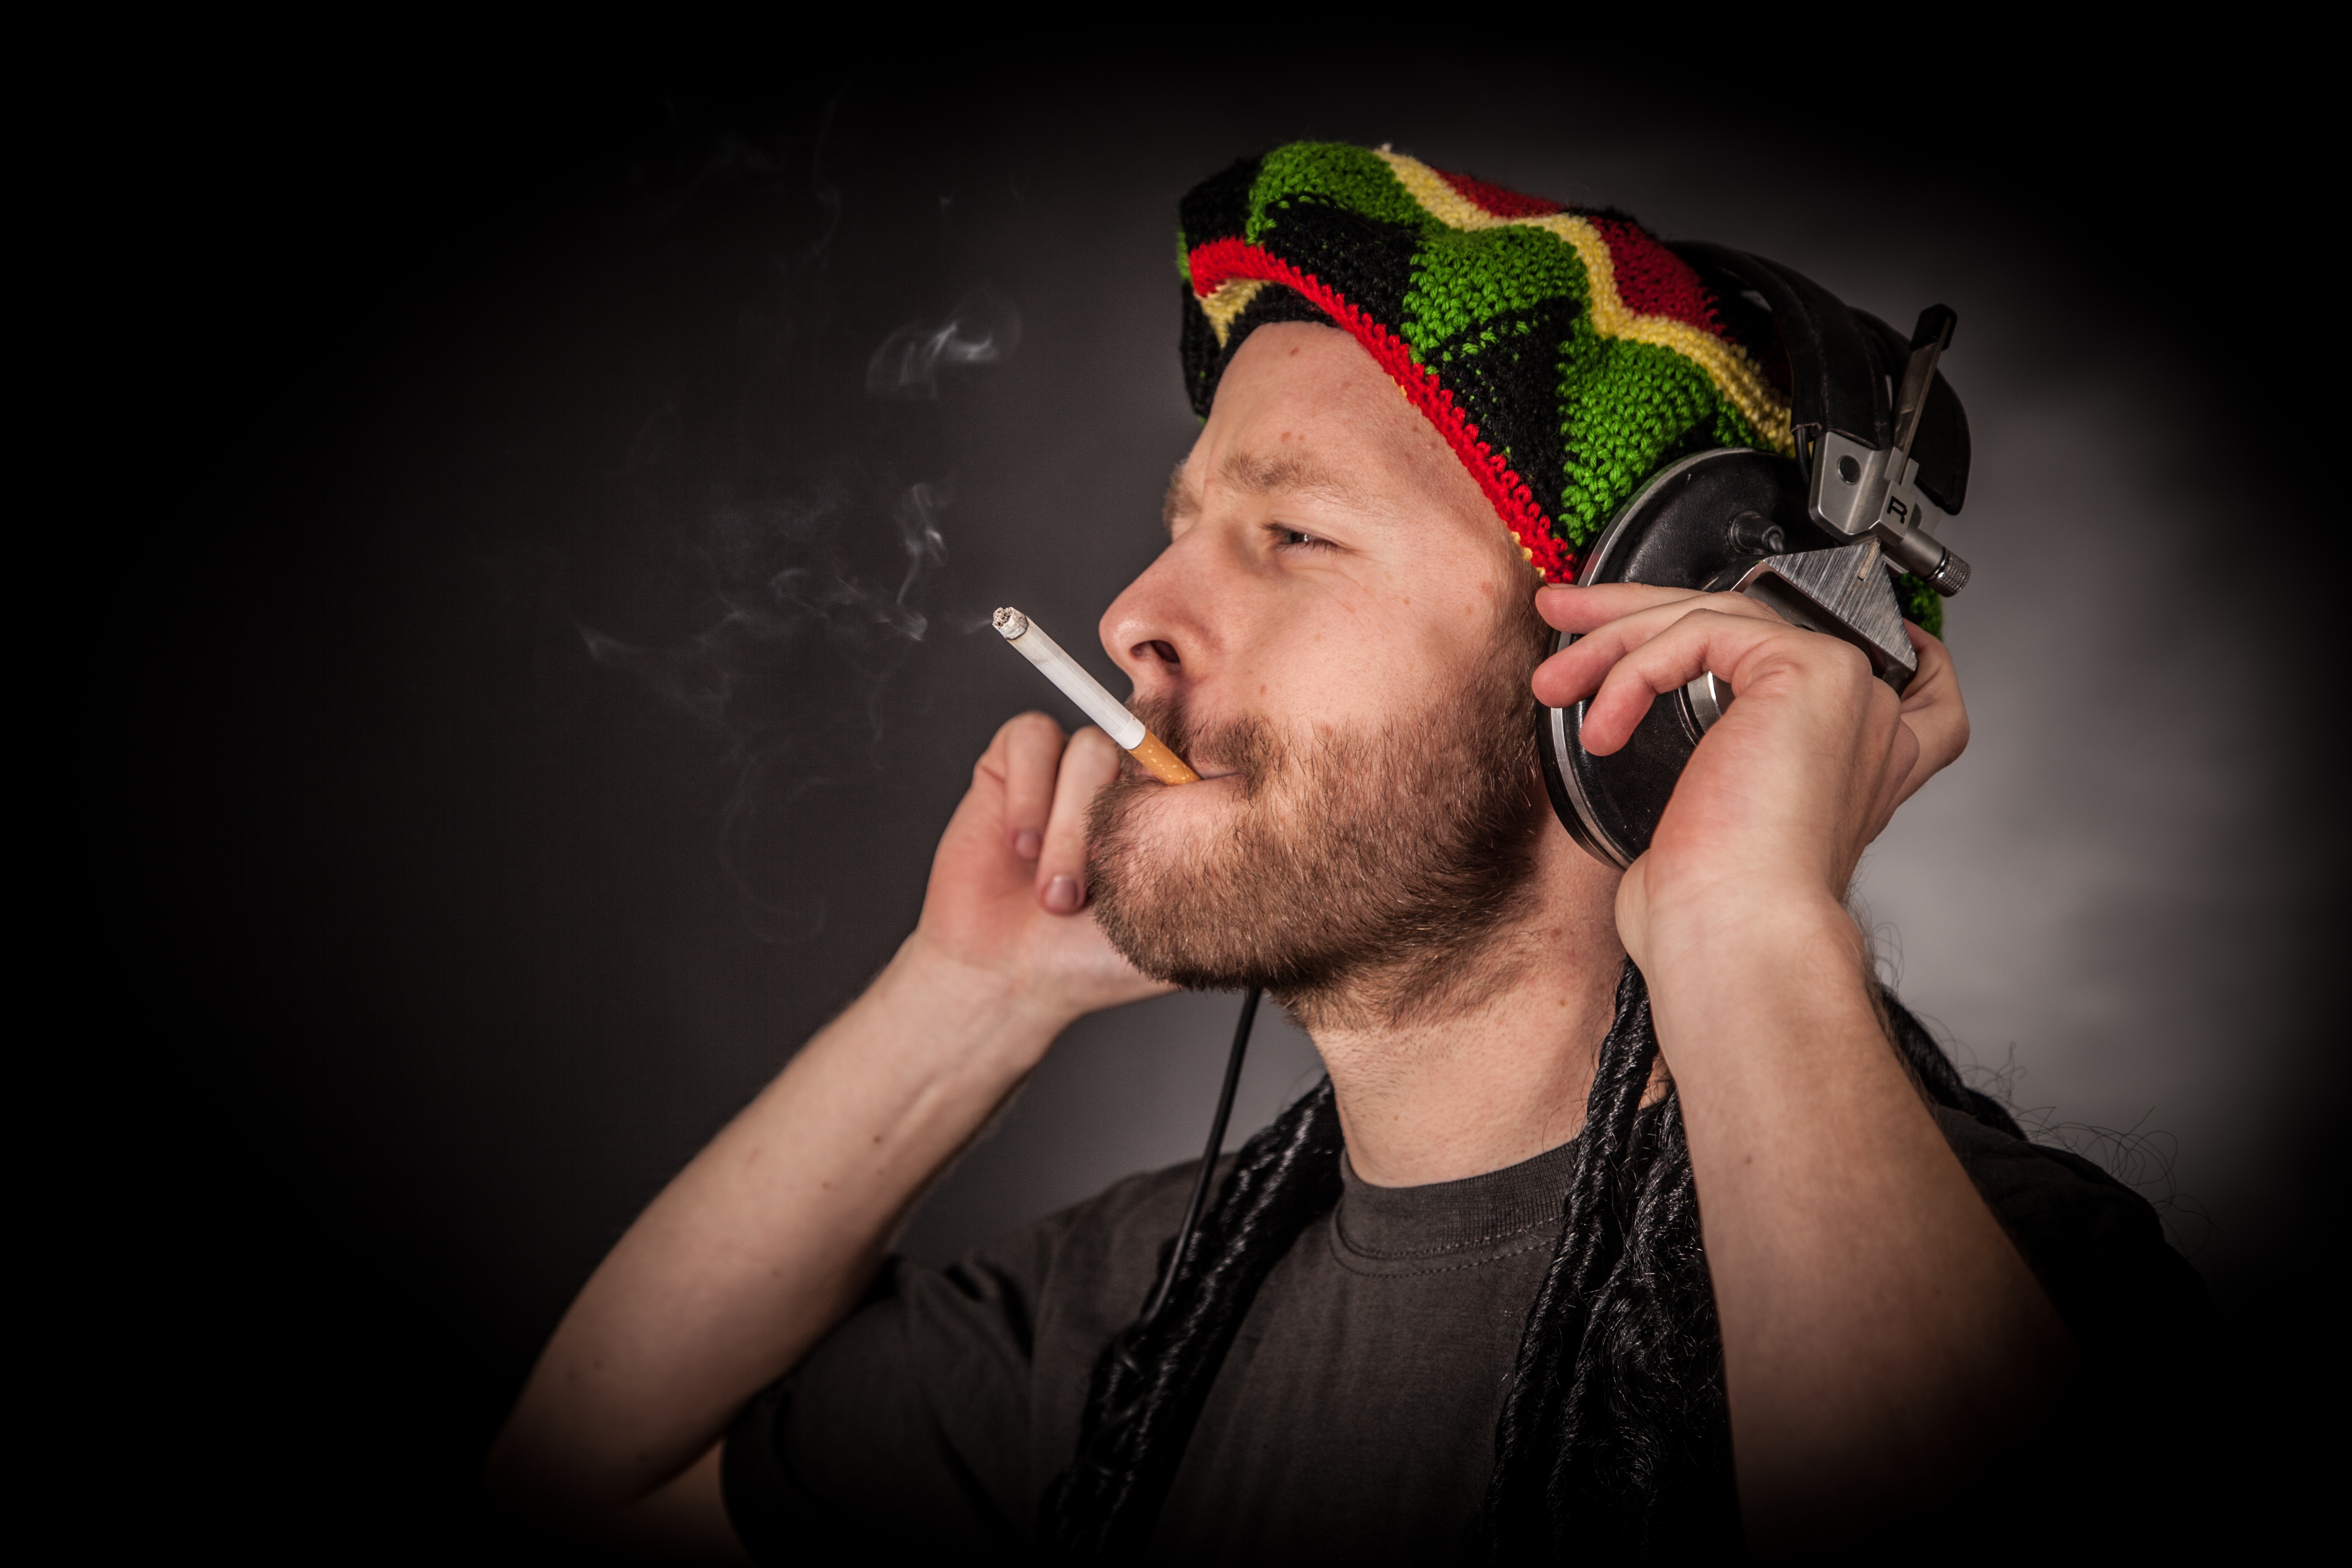 Wallpaper Rasta man in headphones with a cigarette.